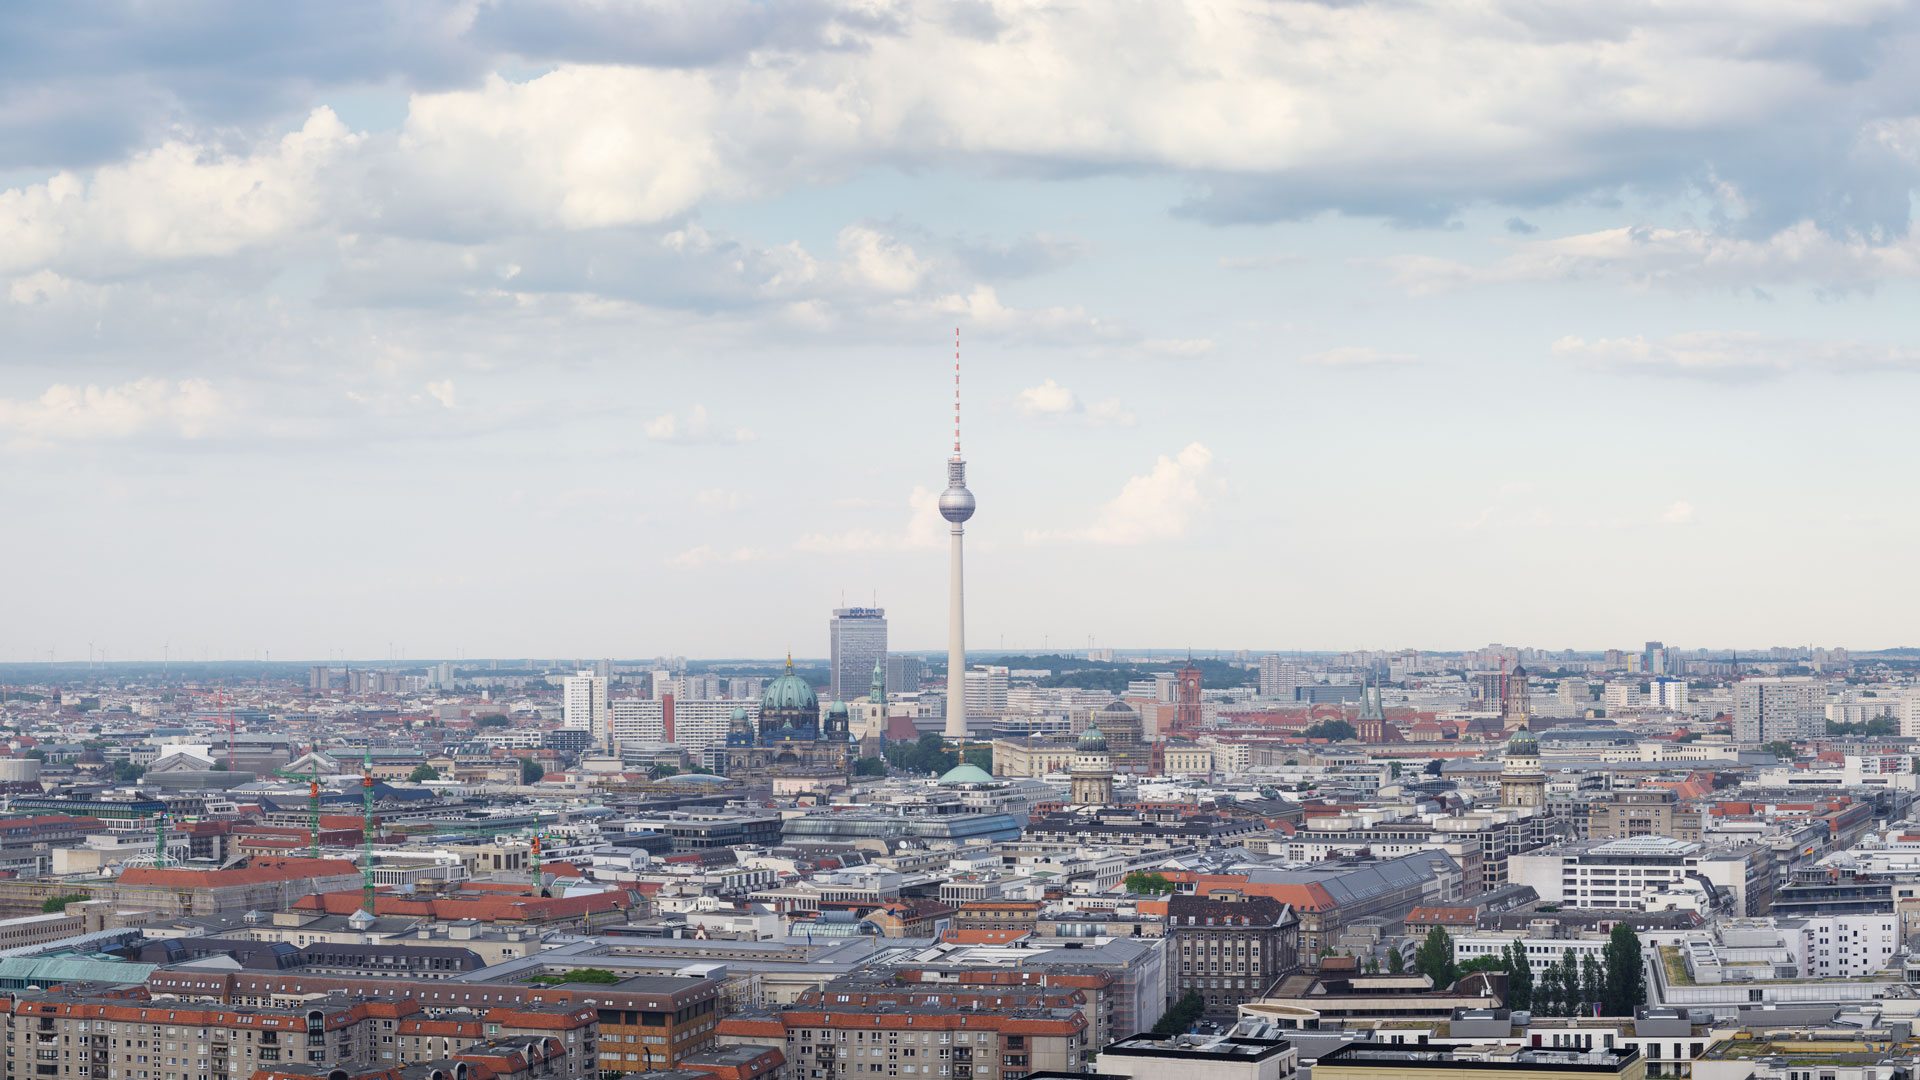 The city of Berlin - panorama